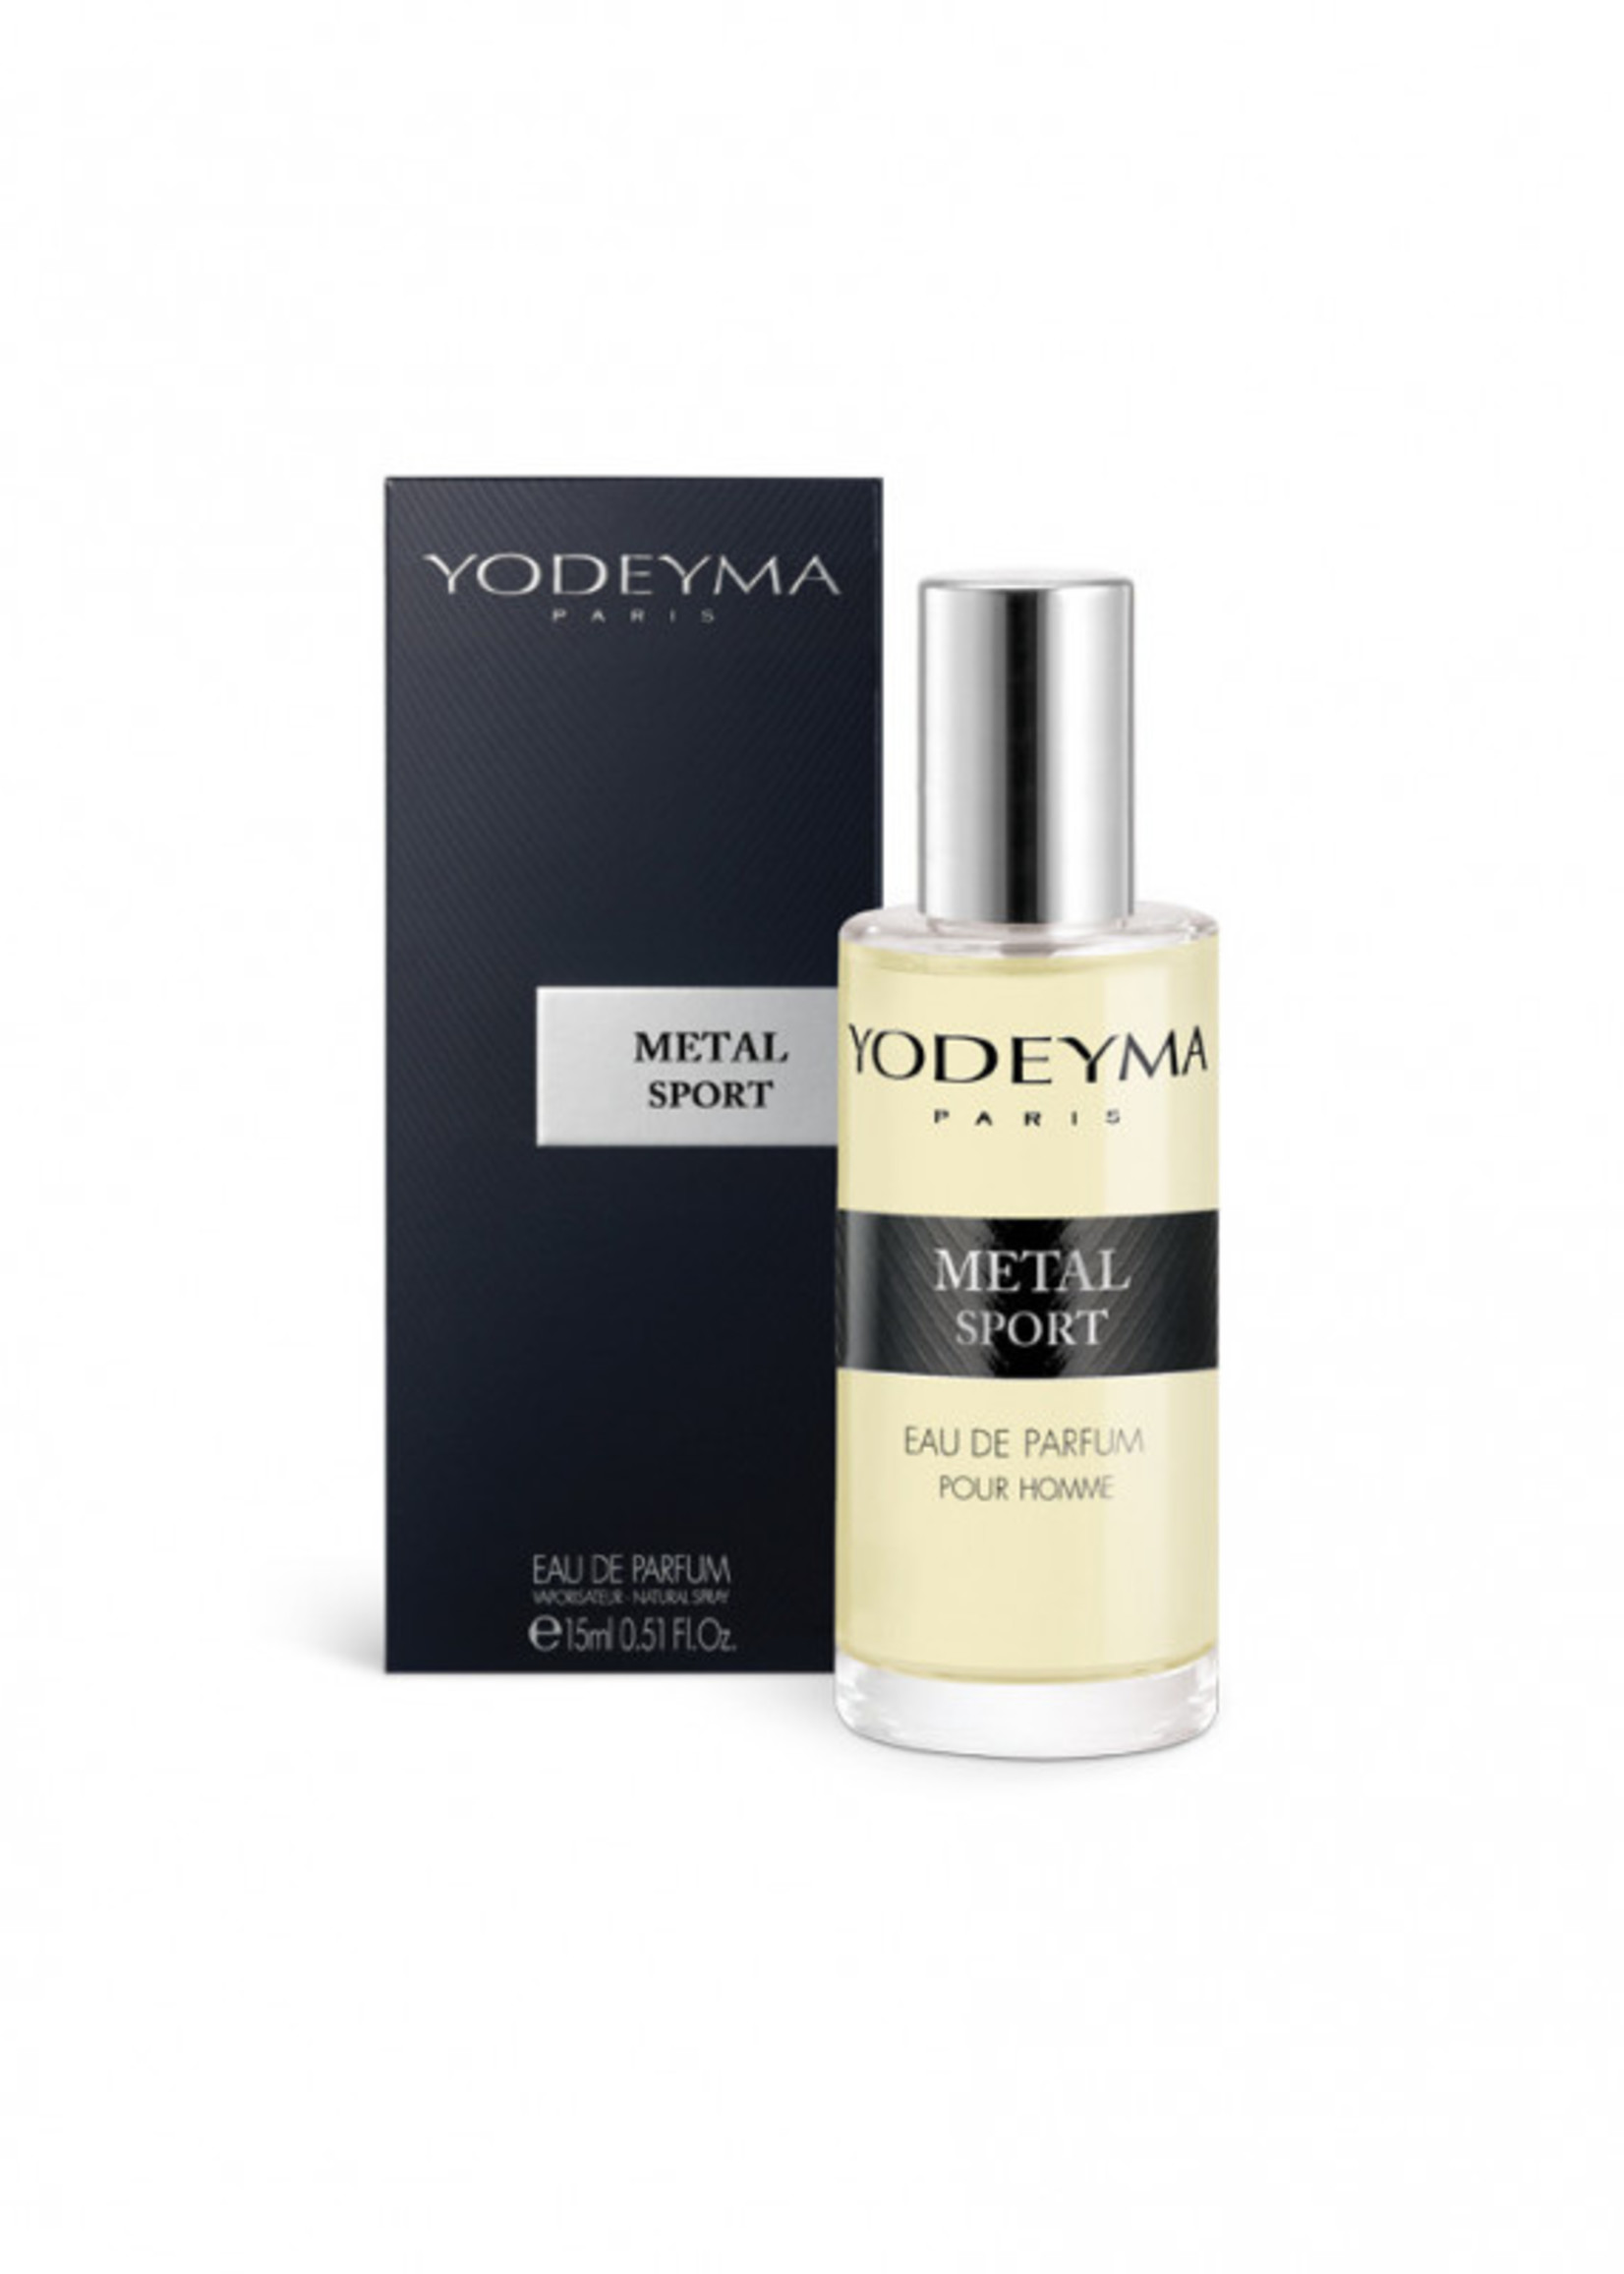 Yodeyma Parfums Yodeyma (Tester) METAL SPORT Eau de Parfum 15 ml.